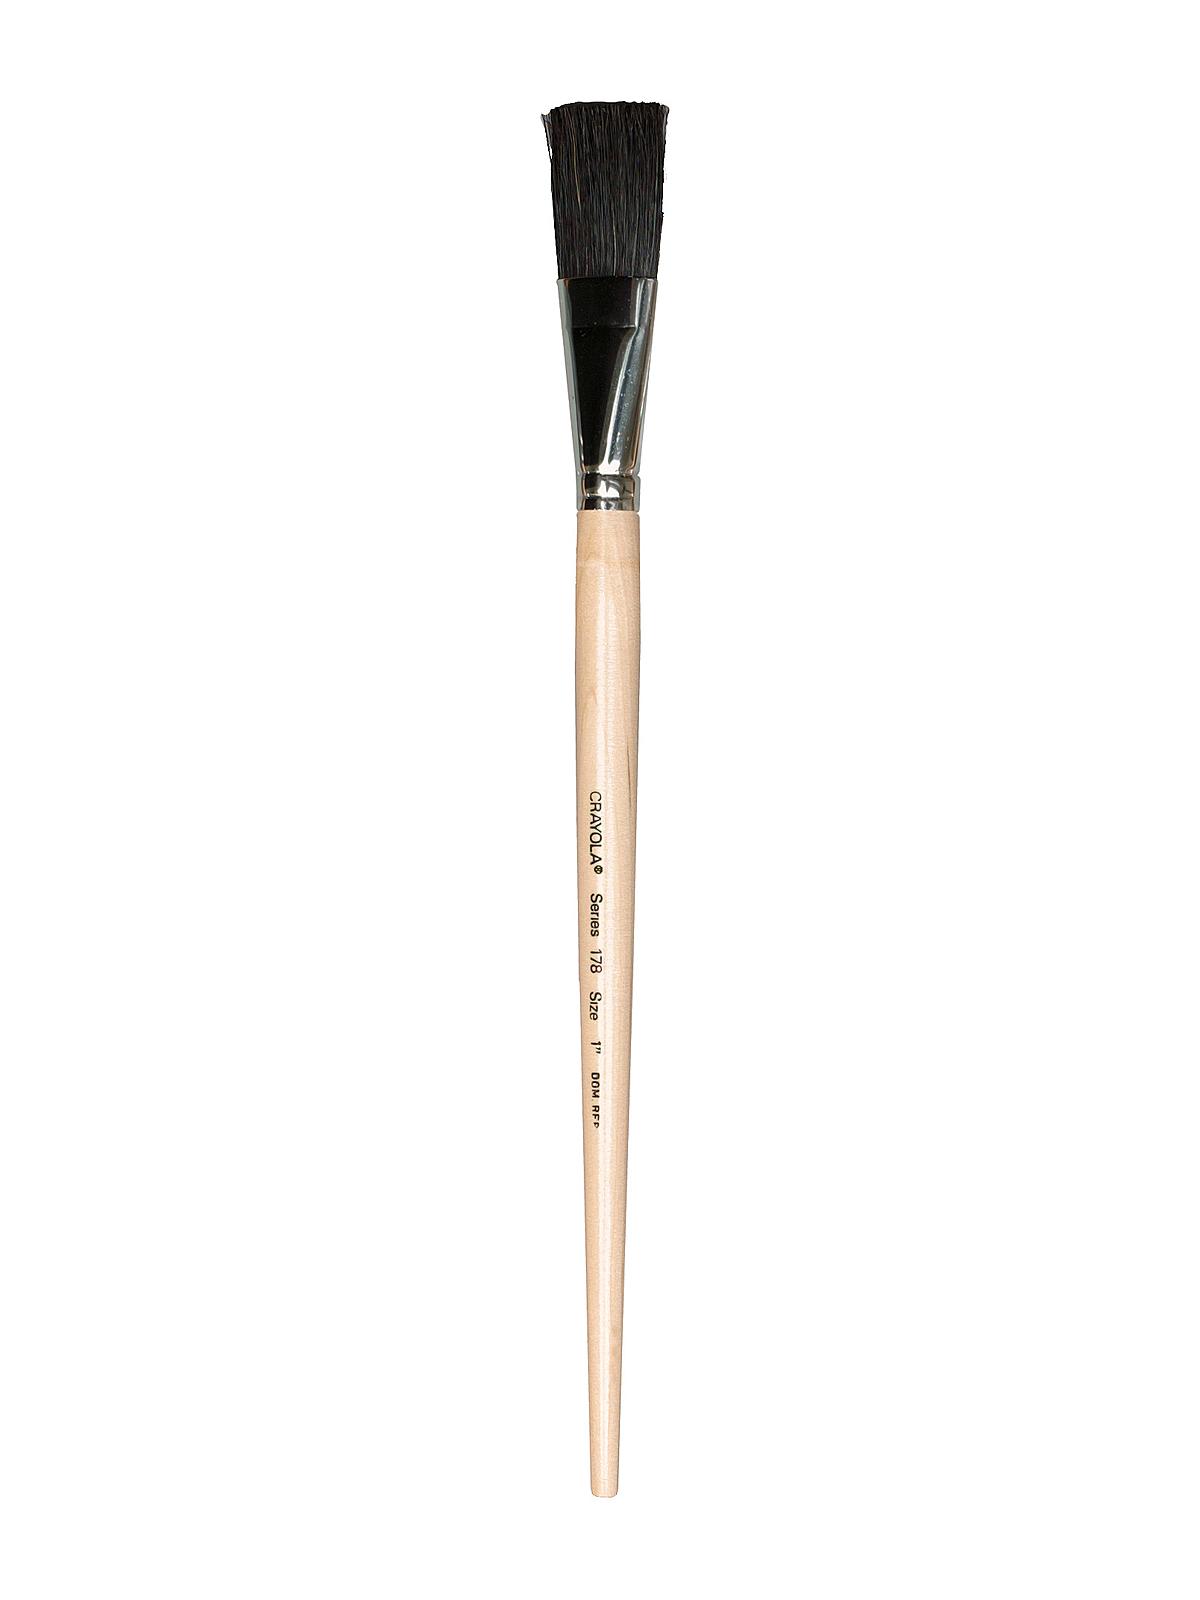 Series 178 Long Handled Black Bristle Brushes 1 In.